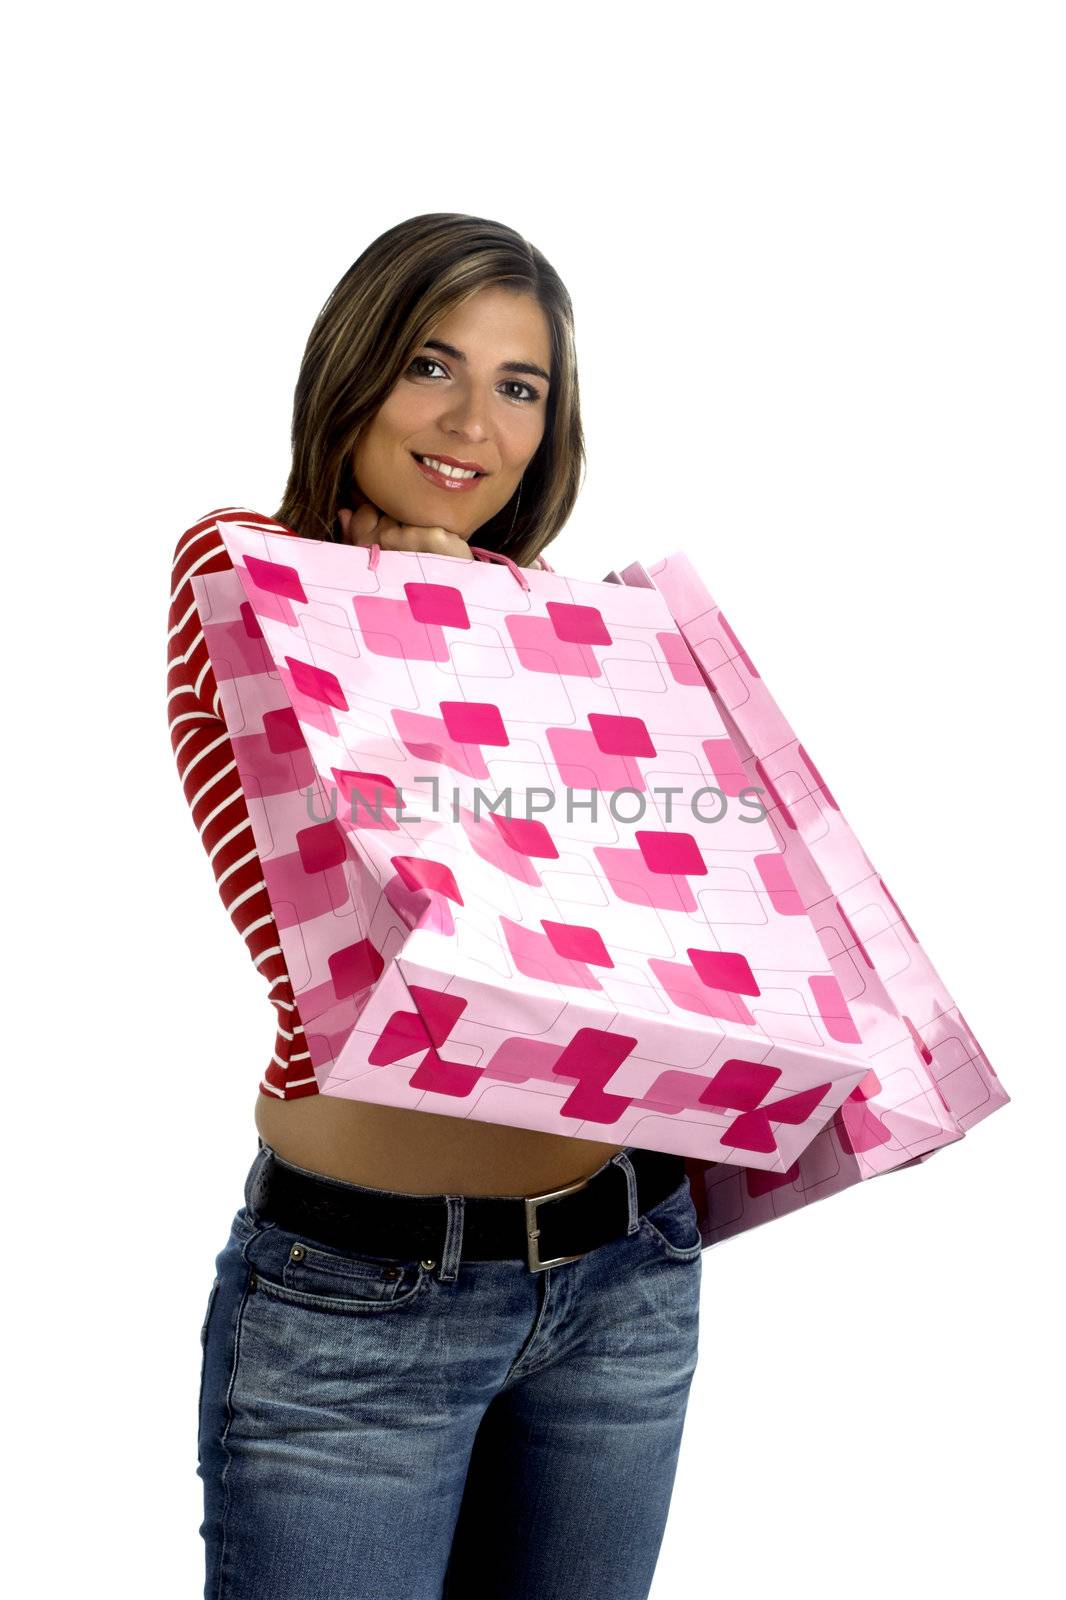 Woman shopping on white background
(photo was taken in studio)
